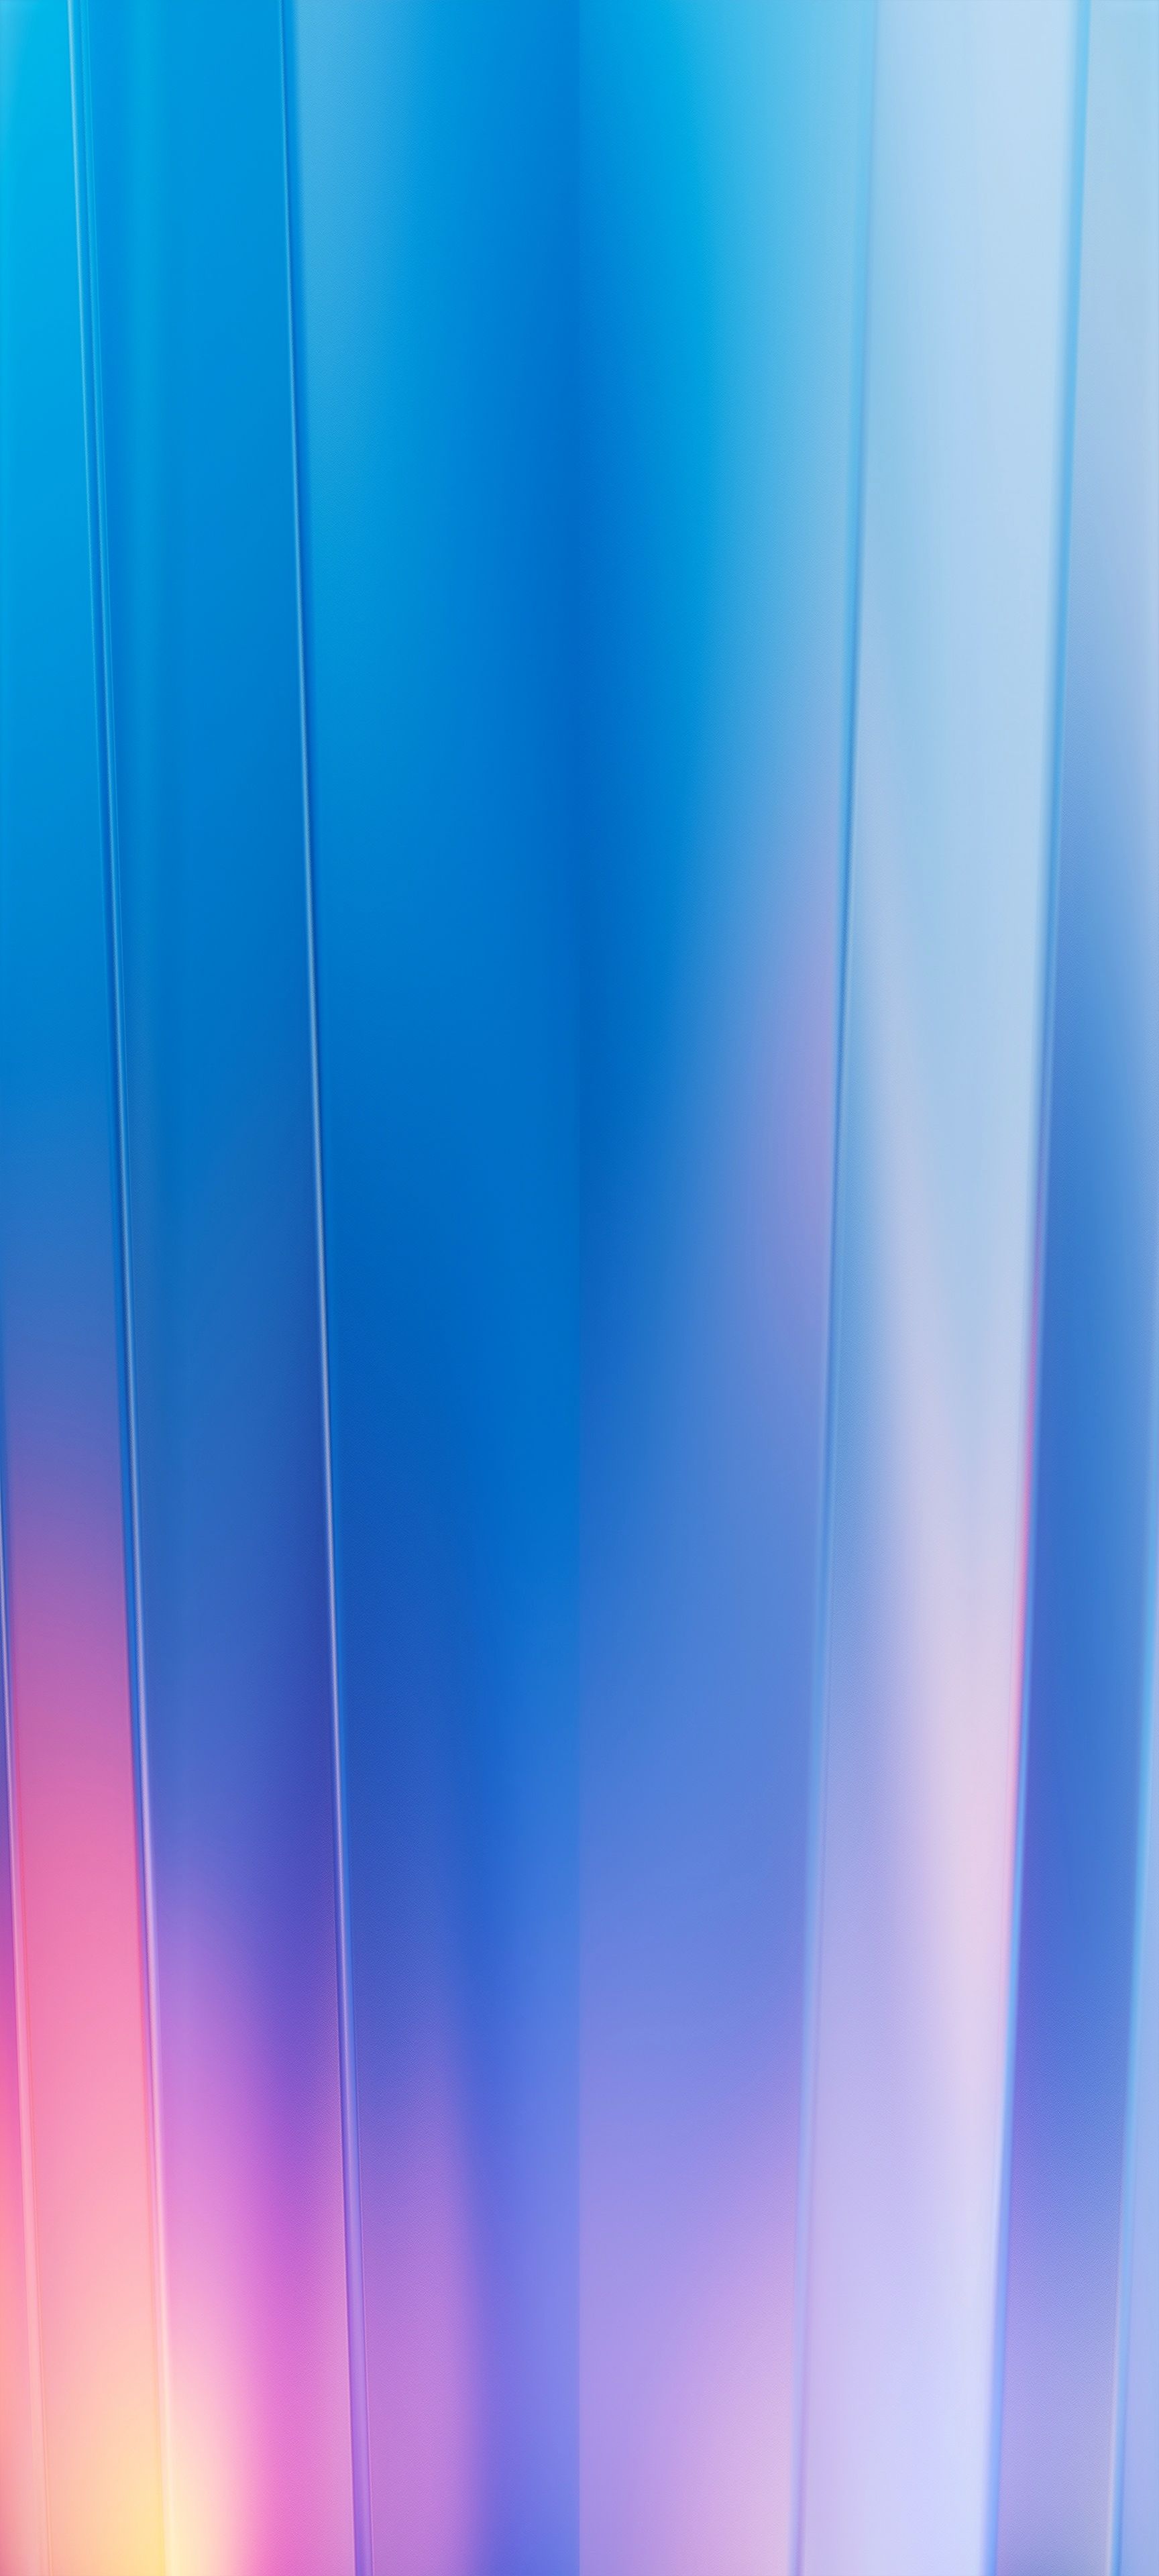 aesthetic blue wallpaper iphone